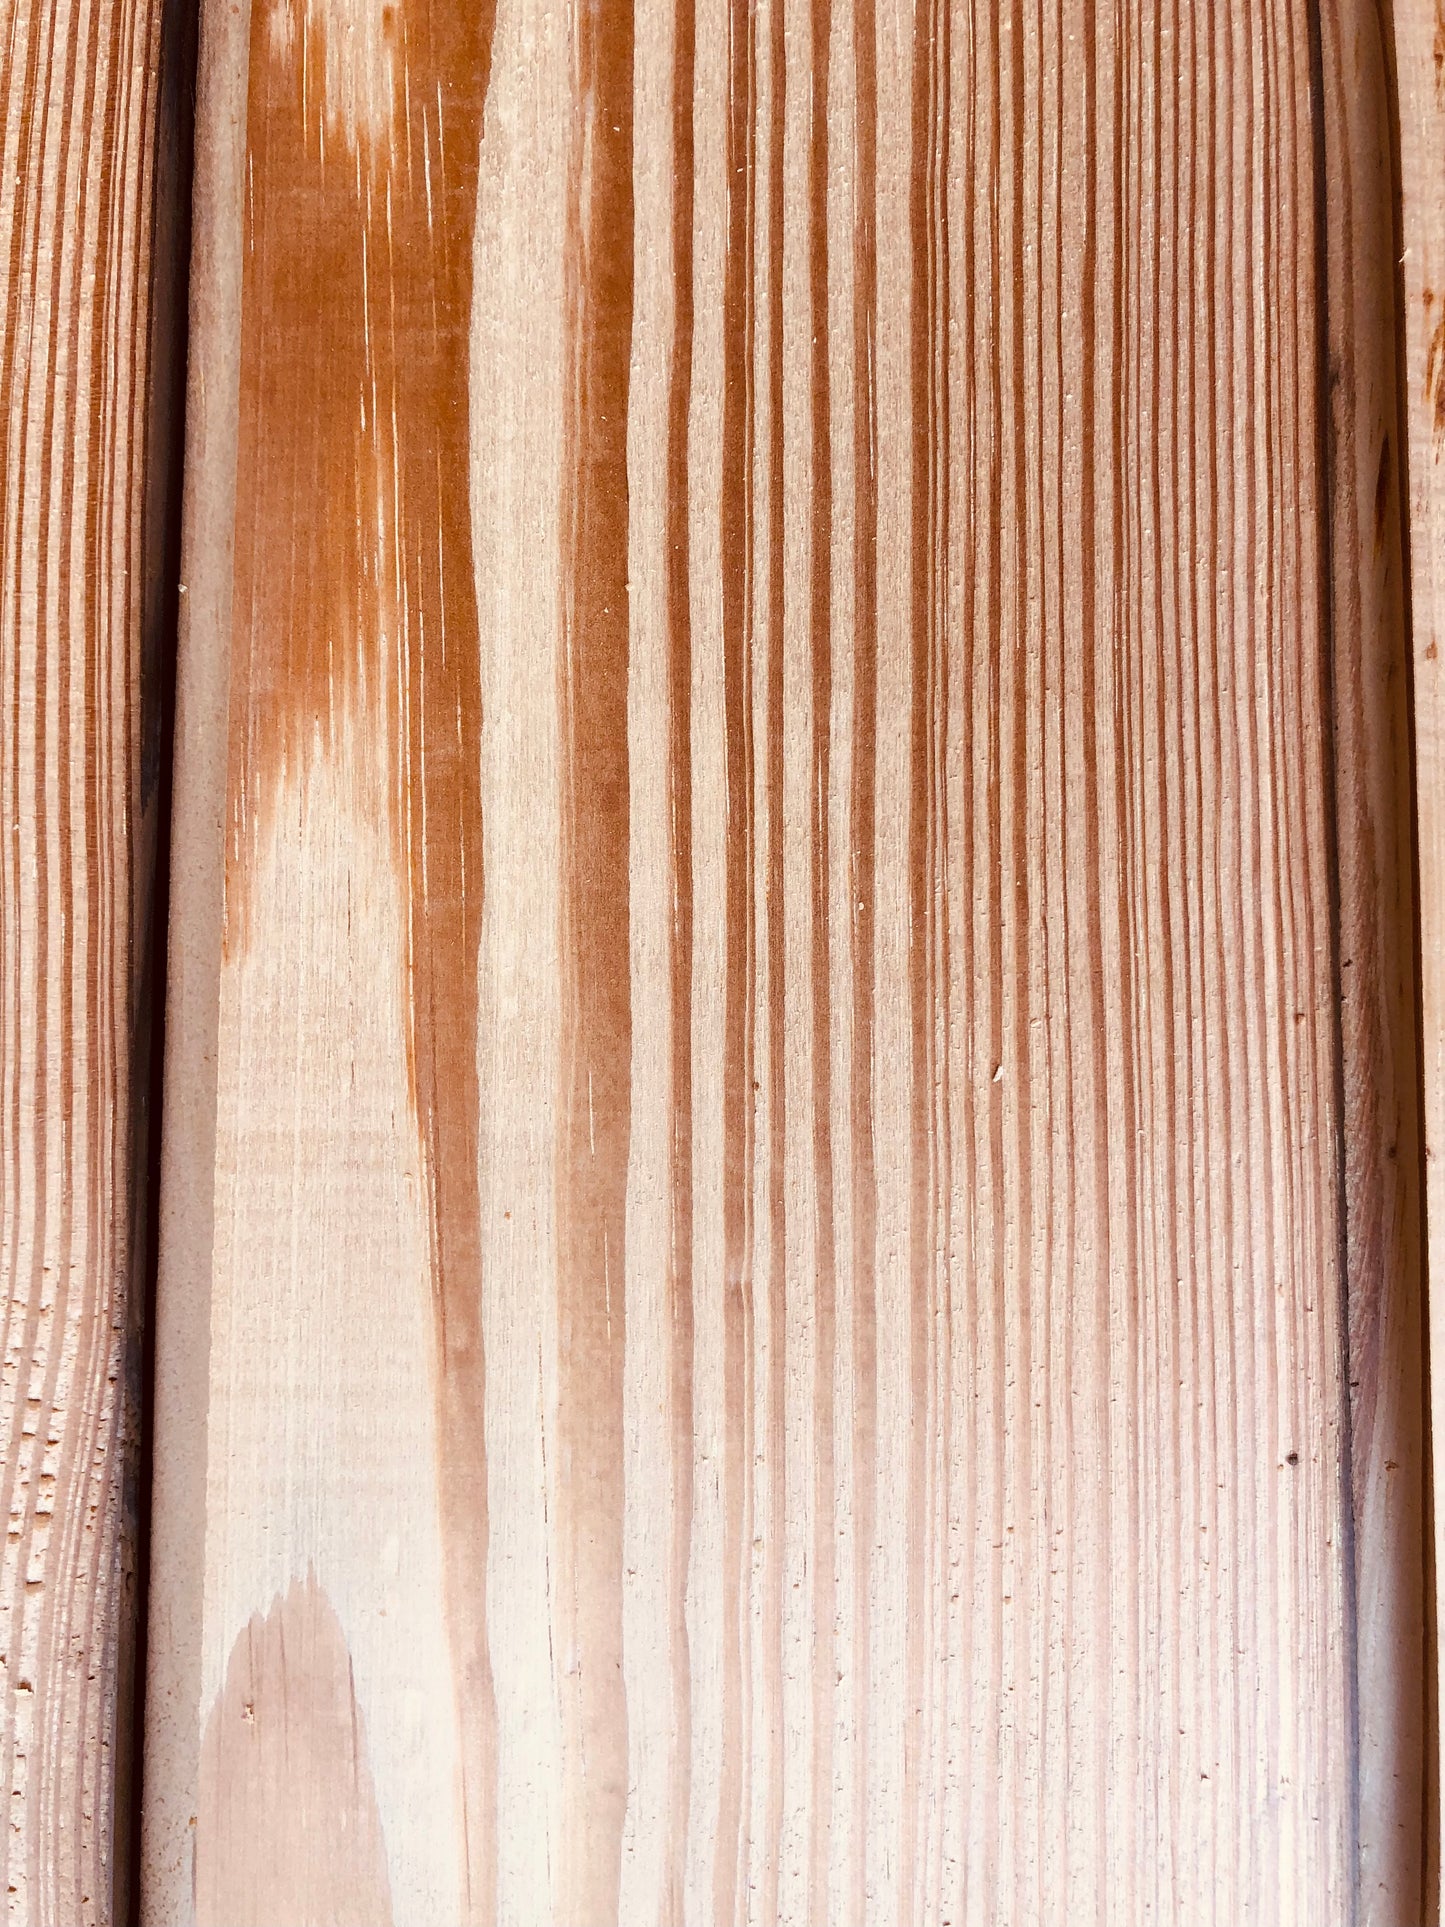 Pitch pine flooring wood grain